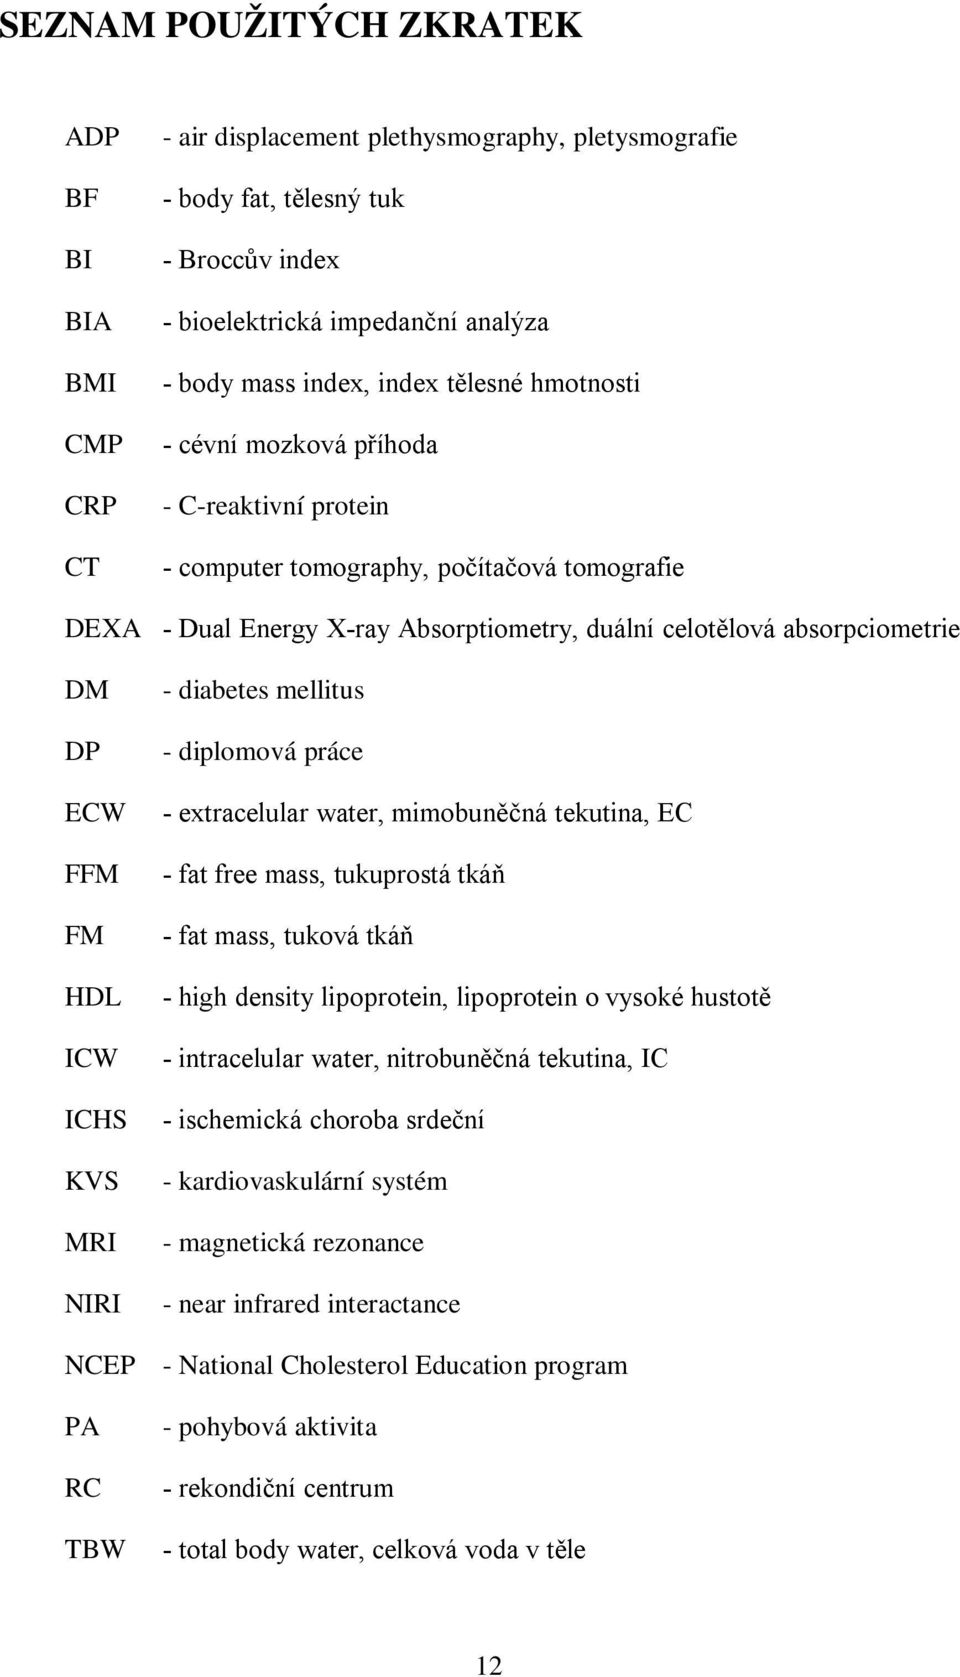 FFM FM HDL ICW ICHS KVS MRI NIRI NCEP PA RC TBW - diabetes mellitus - diplomová práce - extracelular water, mimobuněčná tekutina, EC - fat free mass, tukuprostá tkáň - fat mass, tuková tkáň - high